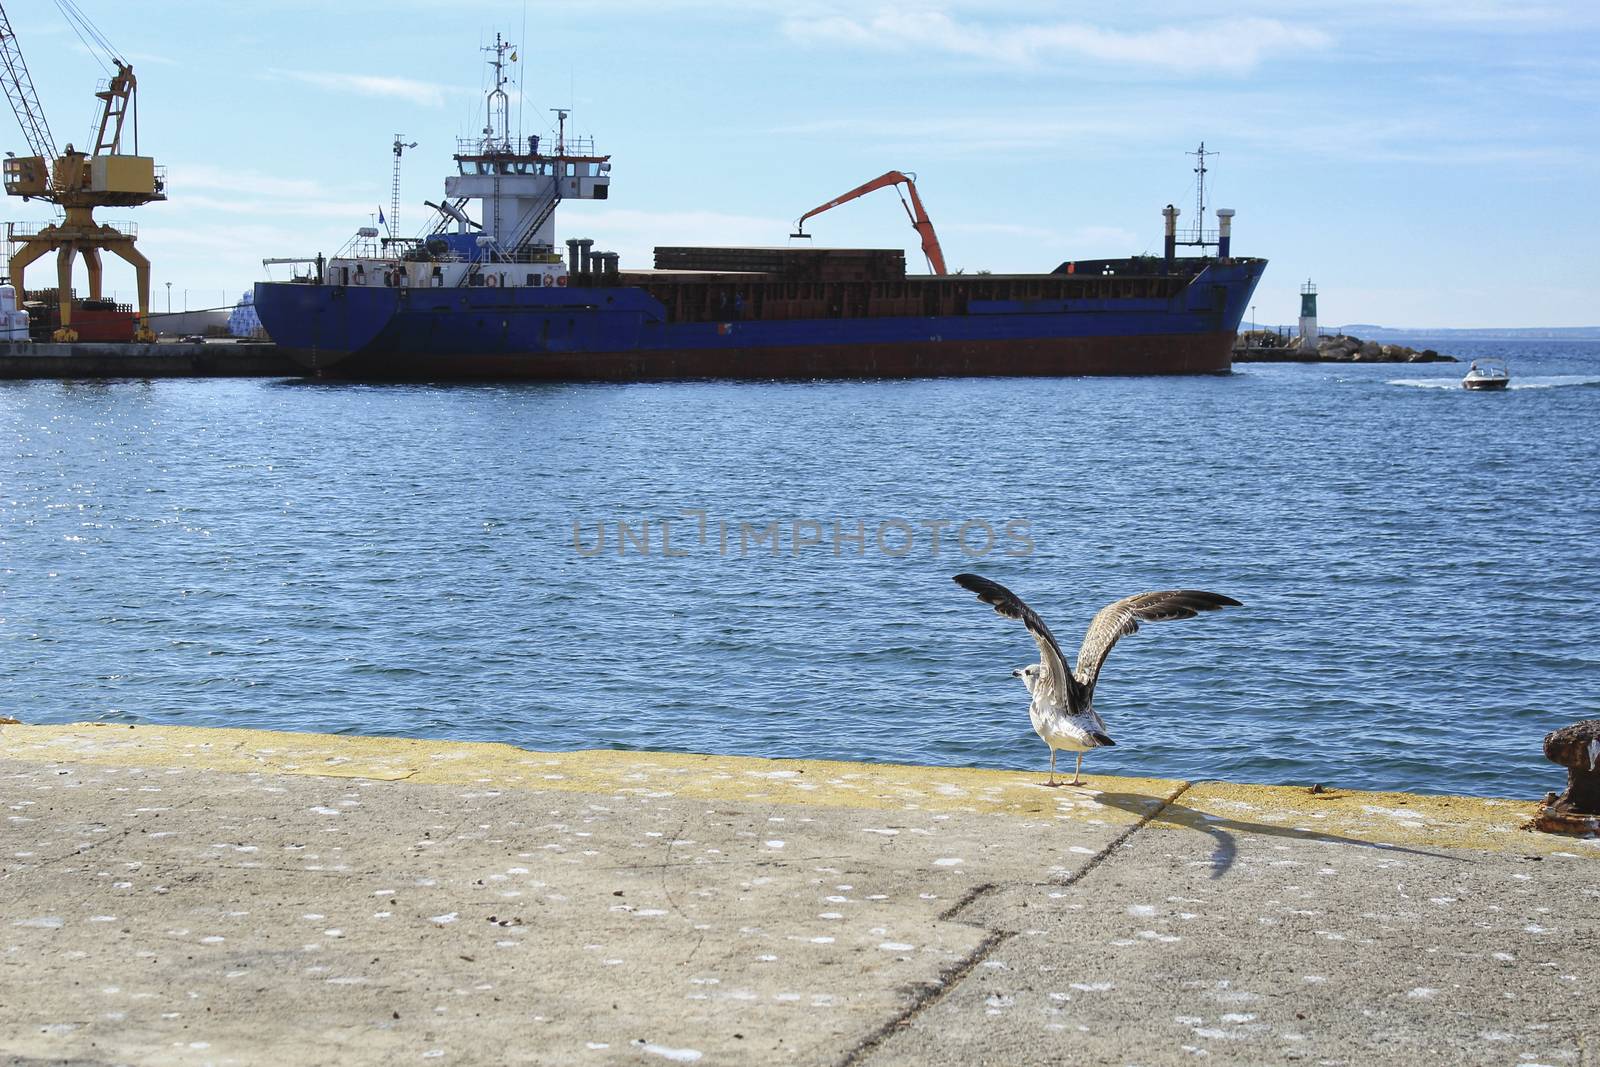 Merchant ship unloading at the dock in Santa Pola